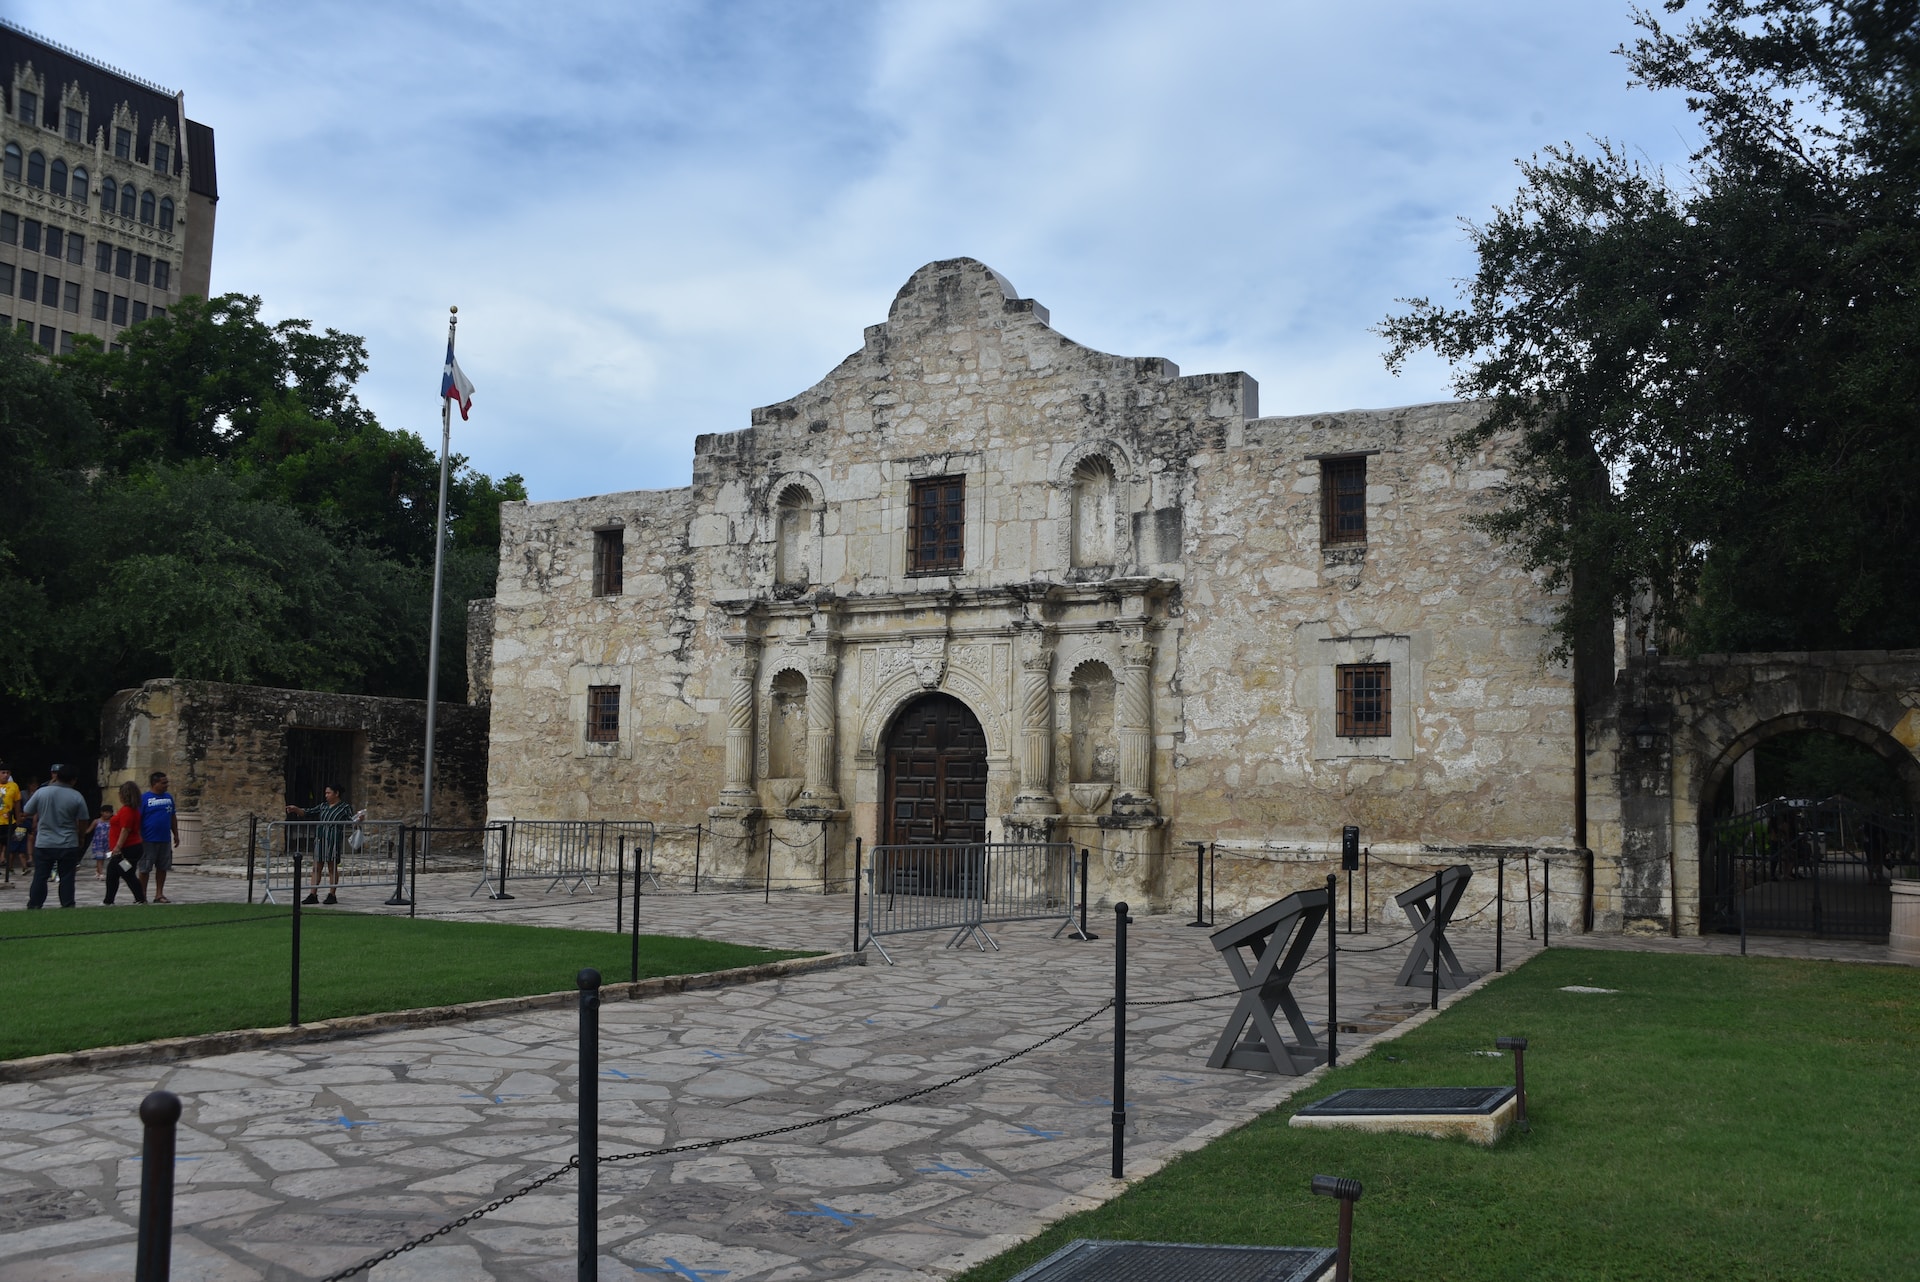 The Alamo ruins